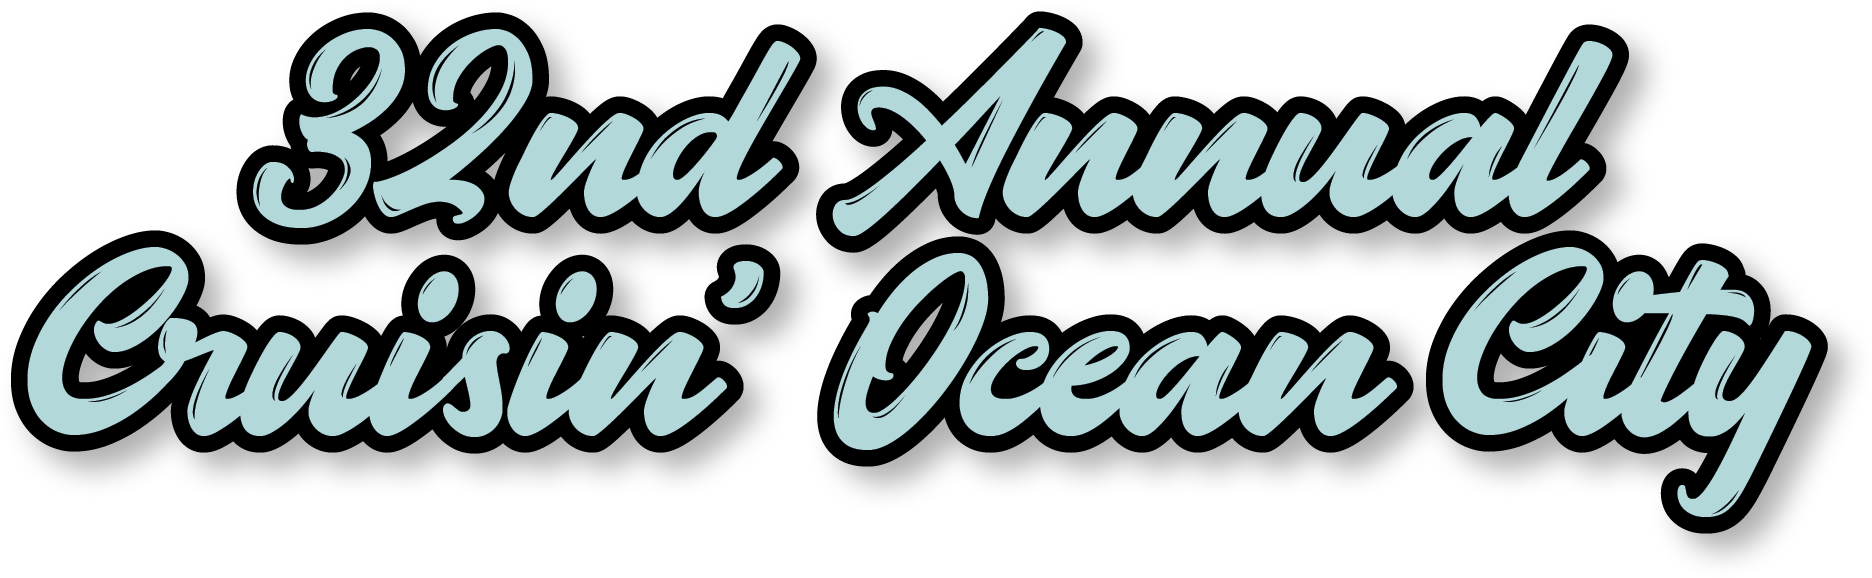 "32nd Annual Cruisin' Ocean City"